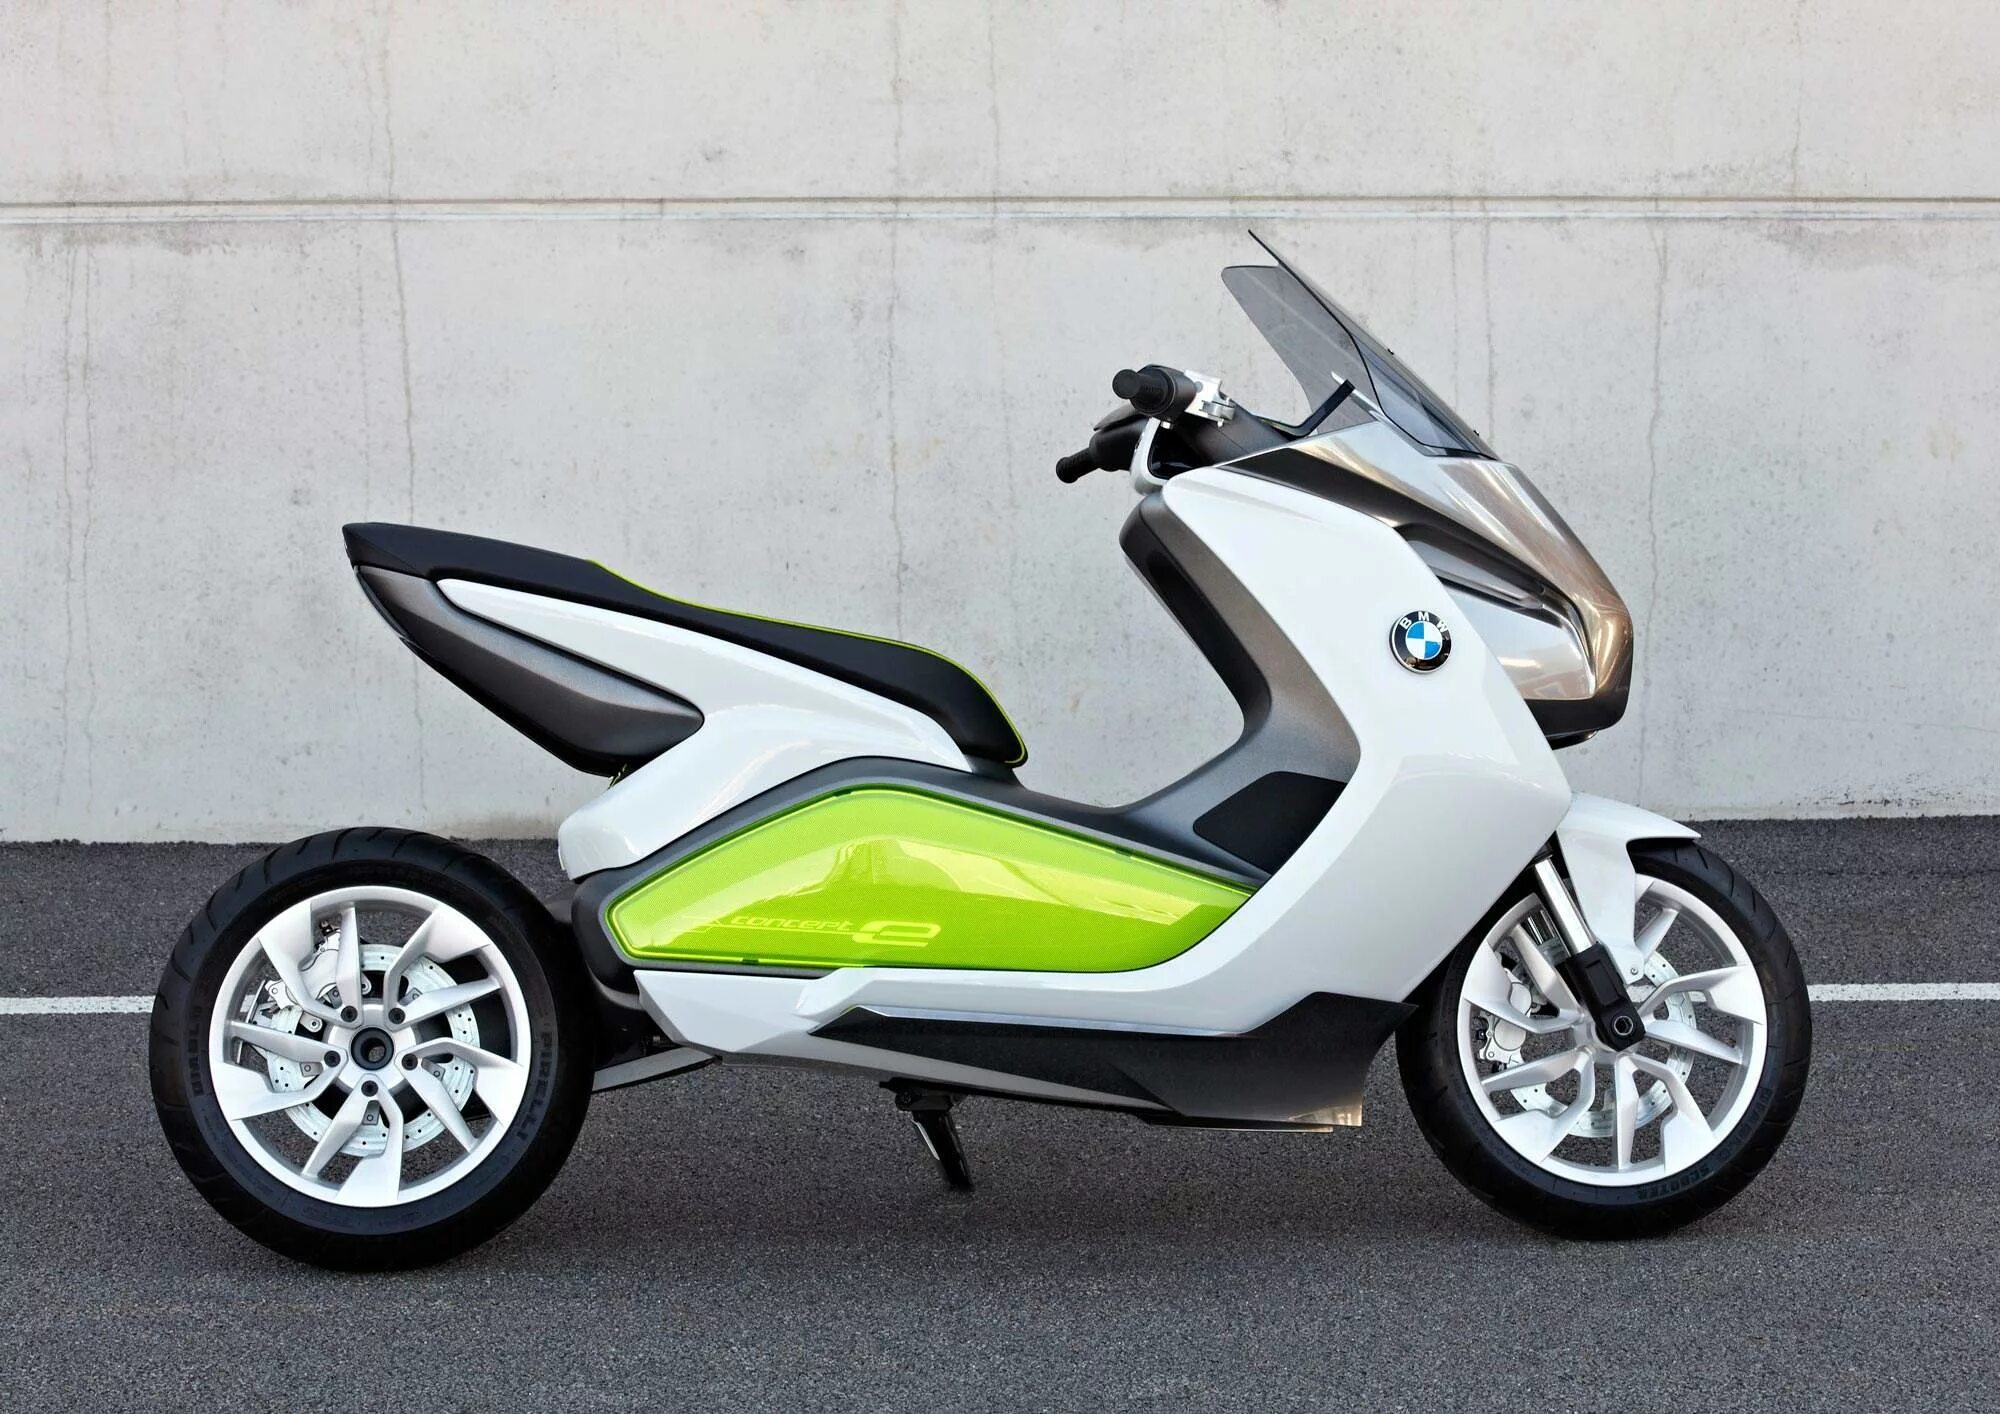 Скутер транспортное. Скутер BMW 50cc. BMW Motorrad скутер. Скутер BMW 50cc утка. BMW Electric Scooter.